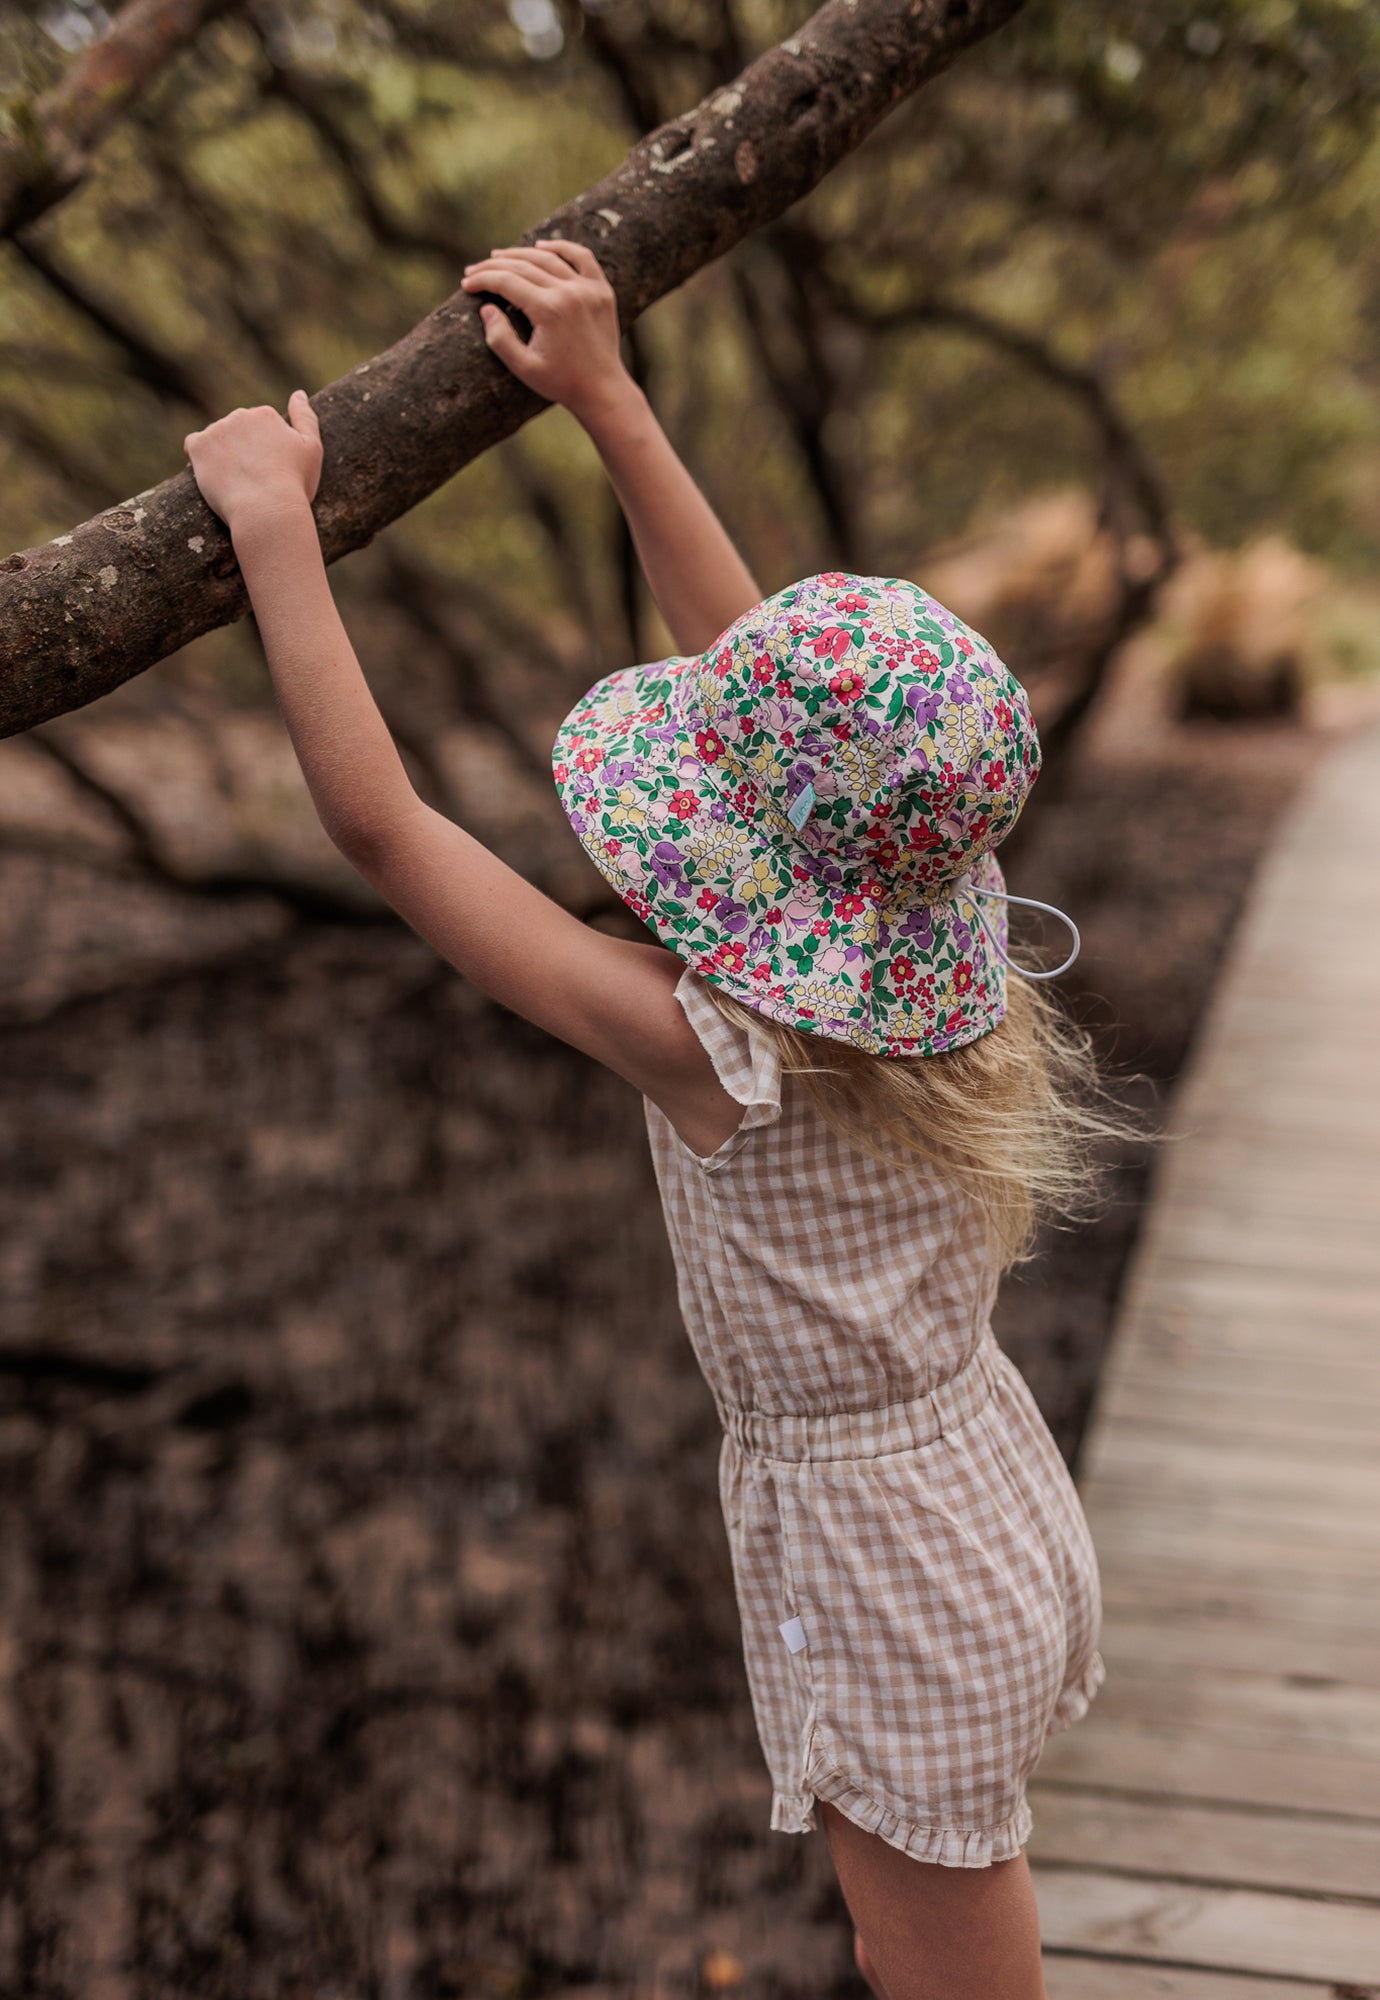 acorn kids - flora bucket hat - floral